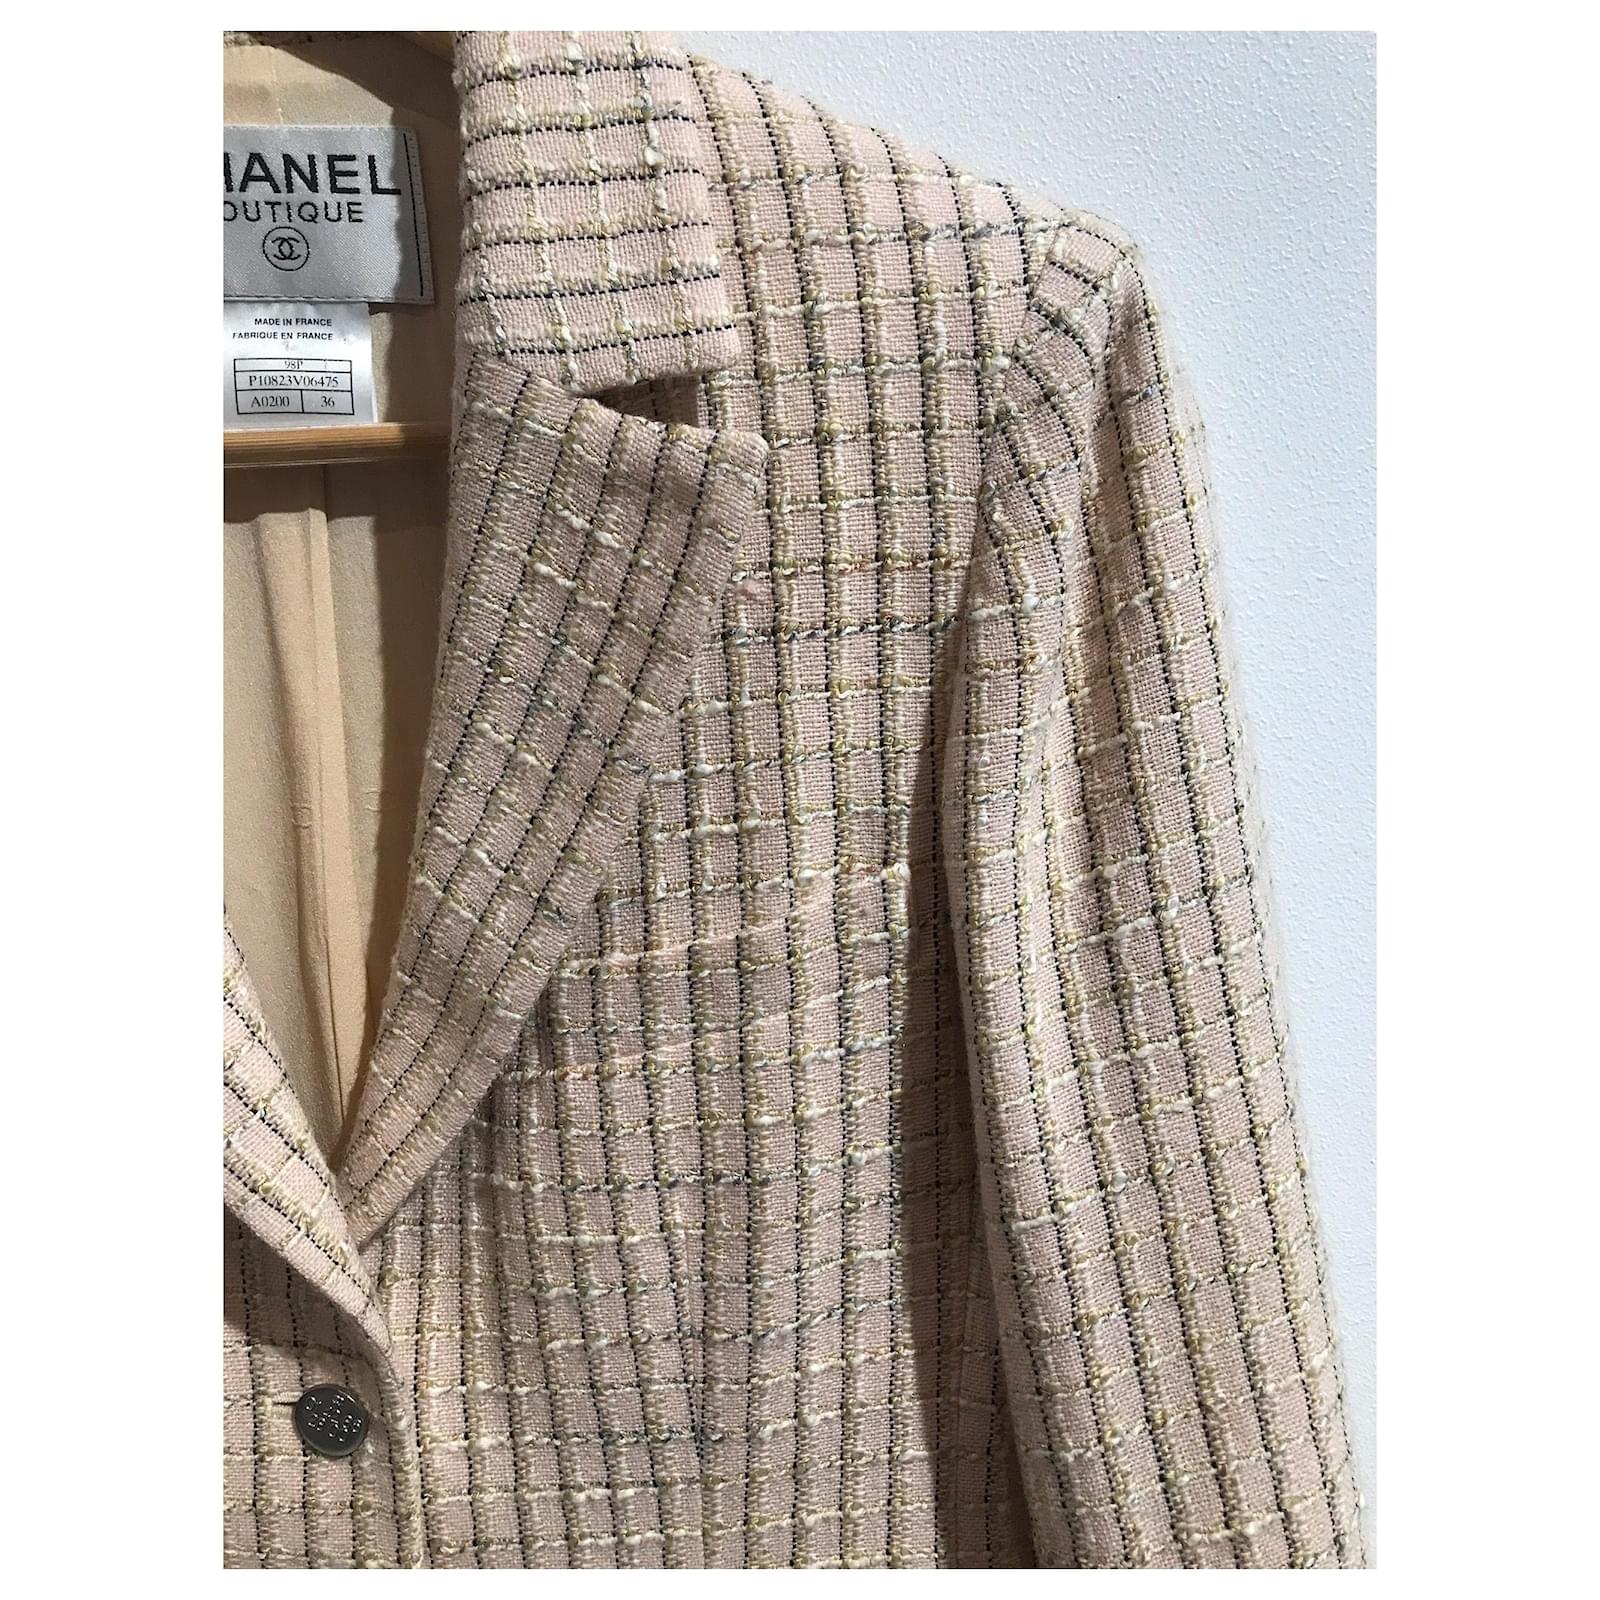 Chanel jacket No.452 - Gem